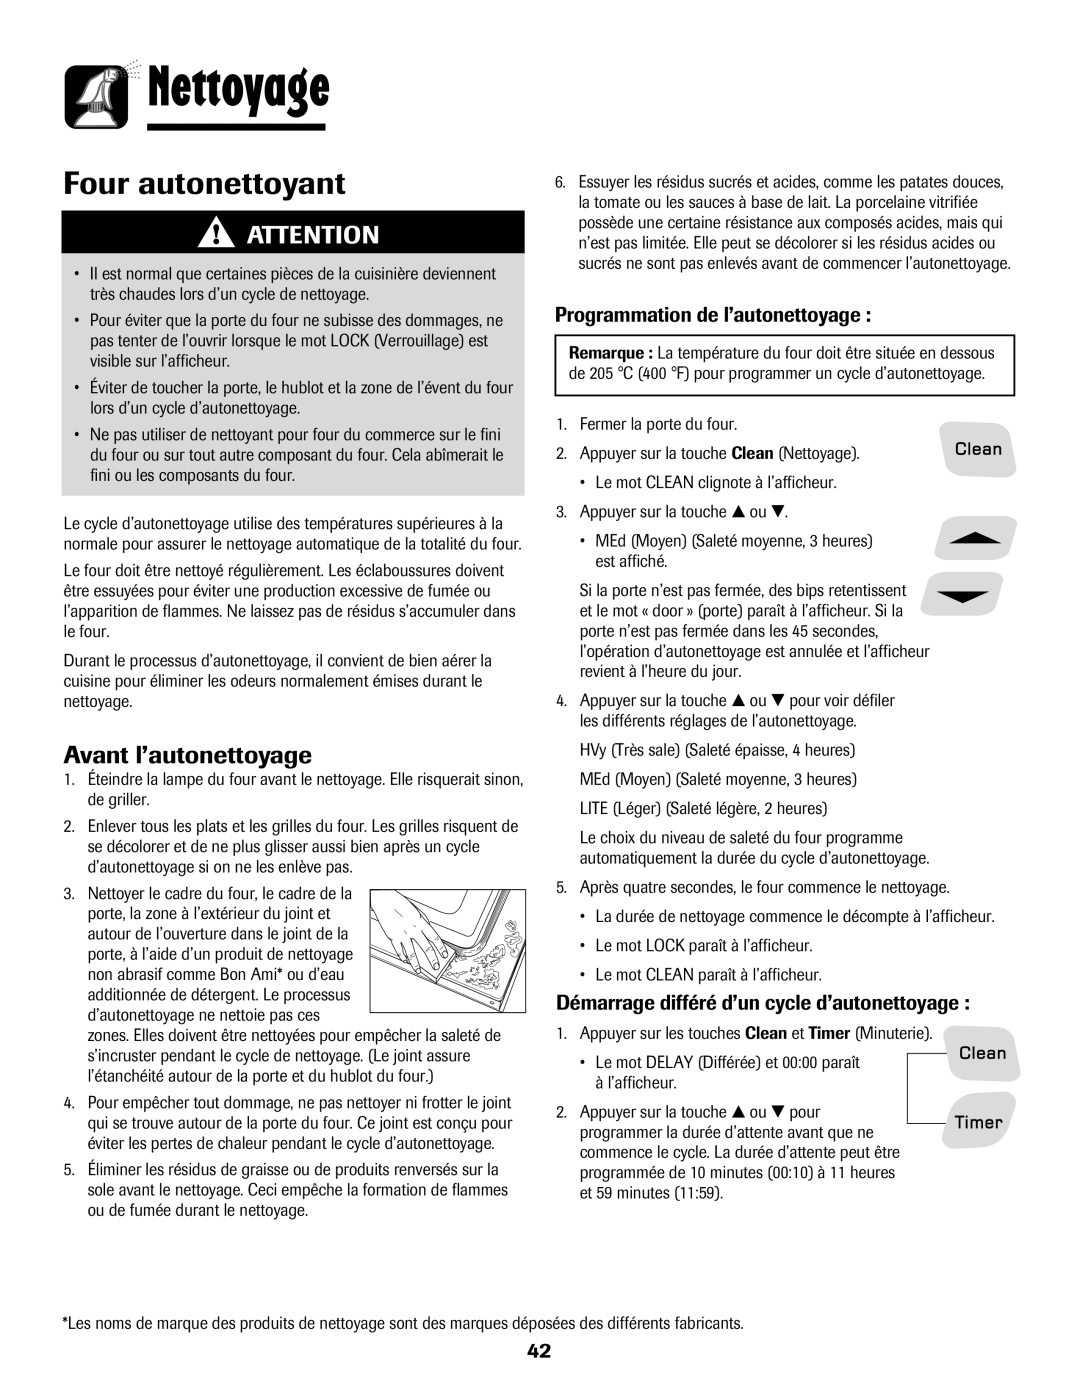 Amana 8113P598-60 manual Nettoyage, Avant l’autonettoyage, Programmation de l’autonettoyage, Four autonettoyant 